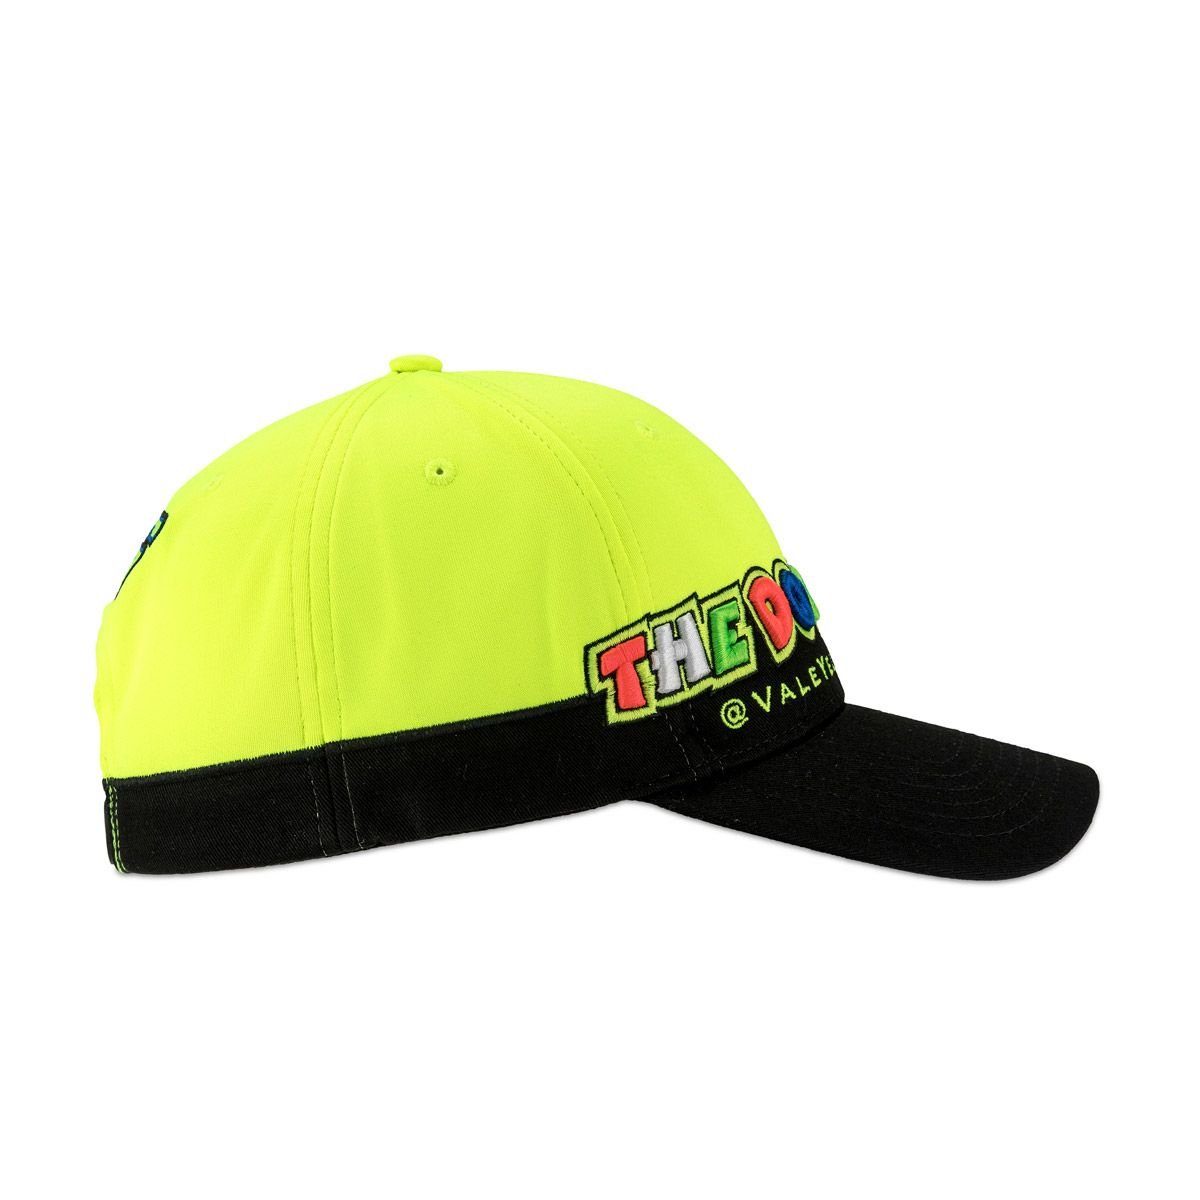 Baseball Größenverstellbar Cap (Schwarz/Neon-Gelb) VR46 Rossi Cupolino Valentino